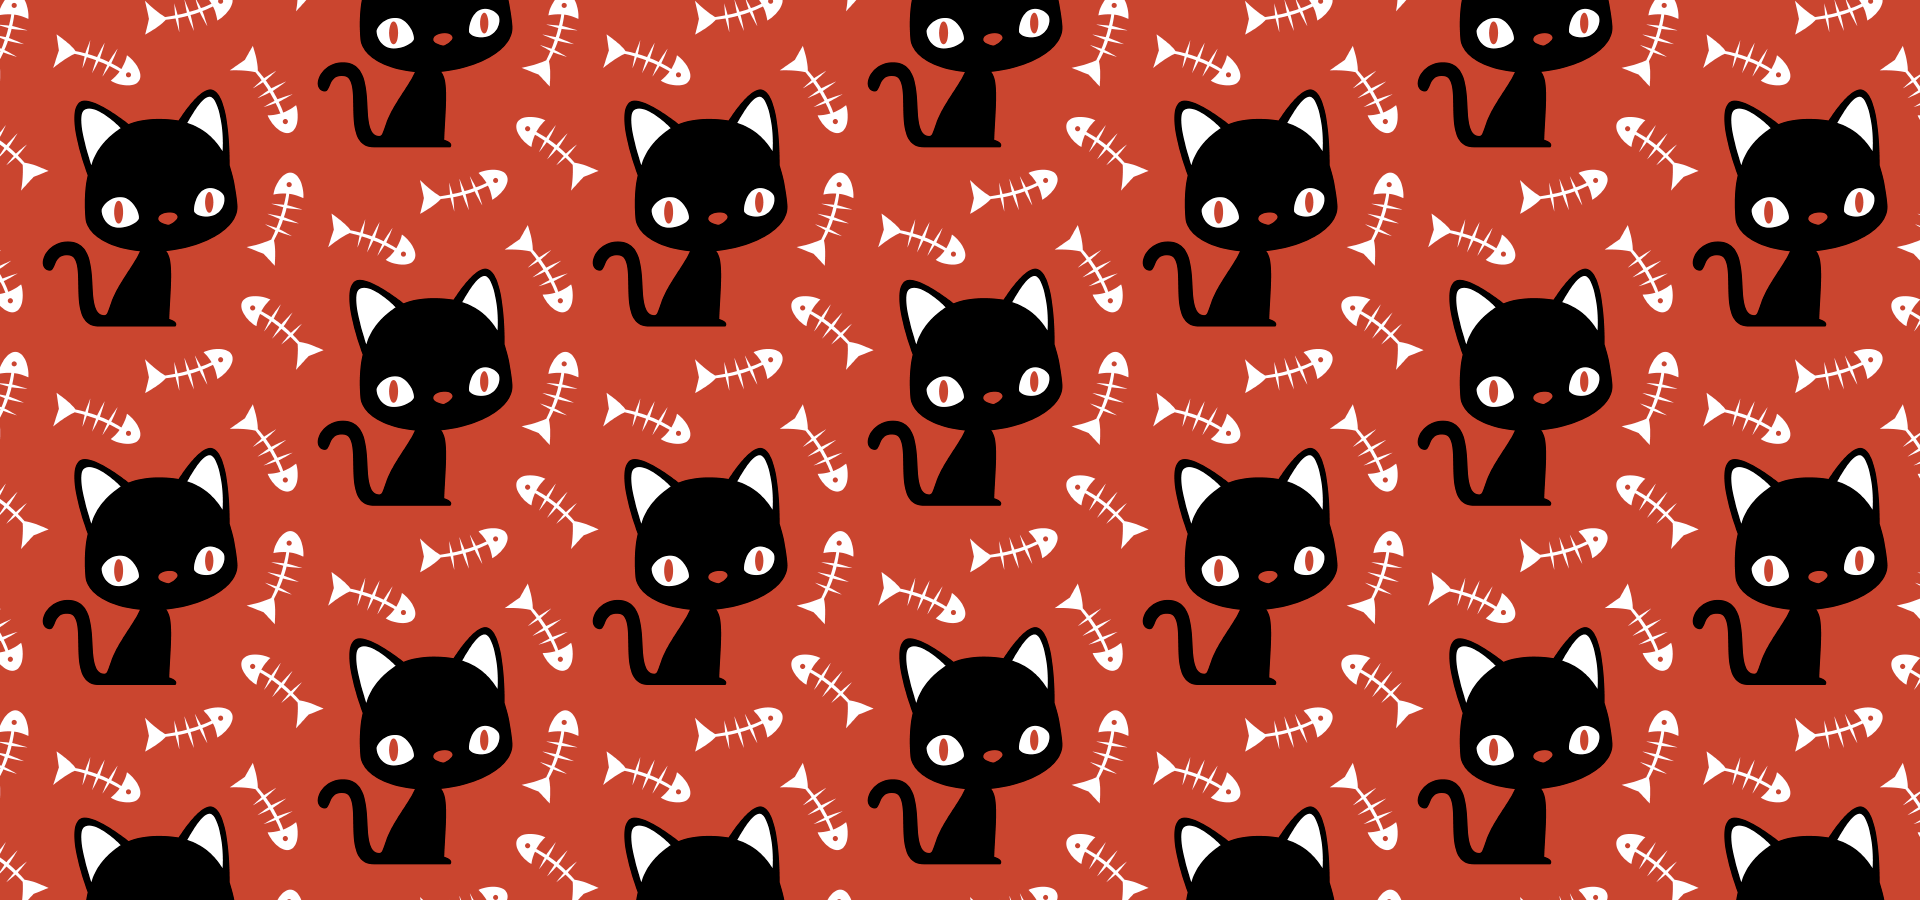 Cute black cat and fish bones red pattern